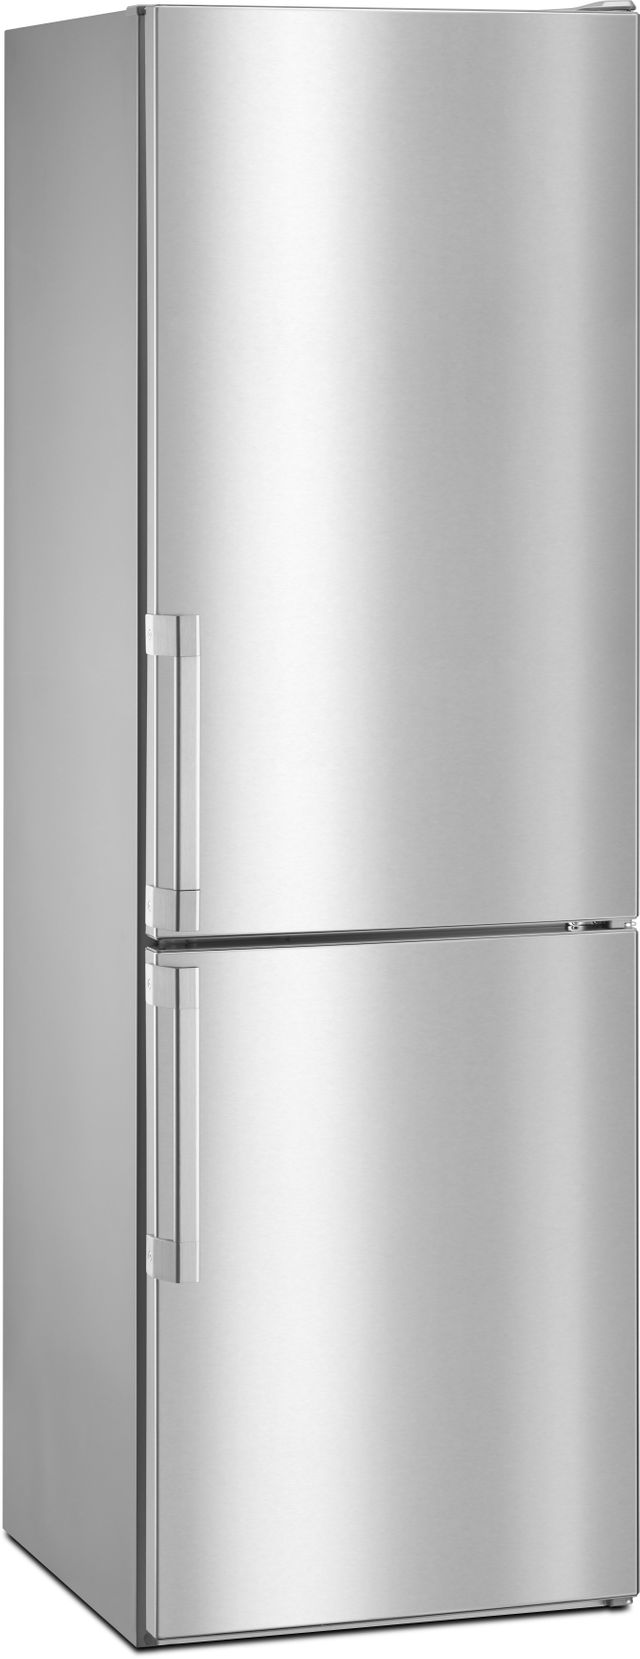 Maytag® 11.3 Cu. Ft. Fingerprint Resistant Stainless Steel Counter Depth Bottom Mount Refrigerator 1